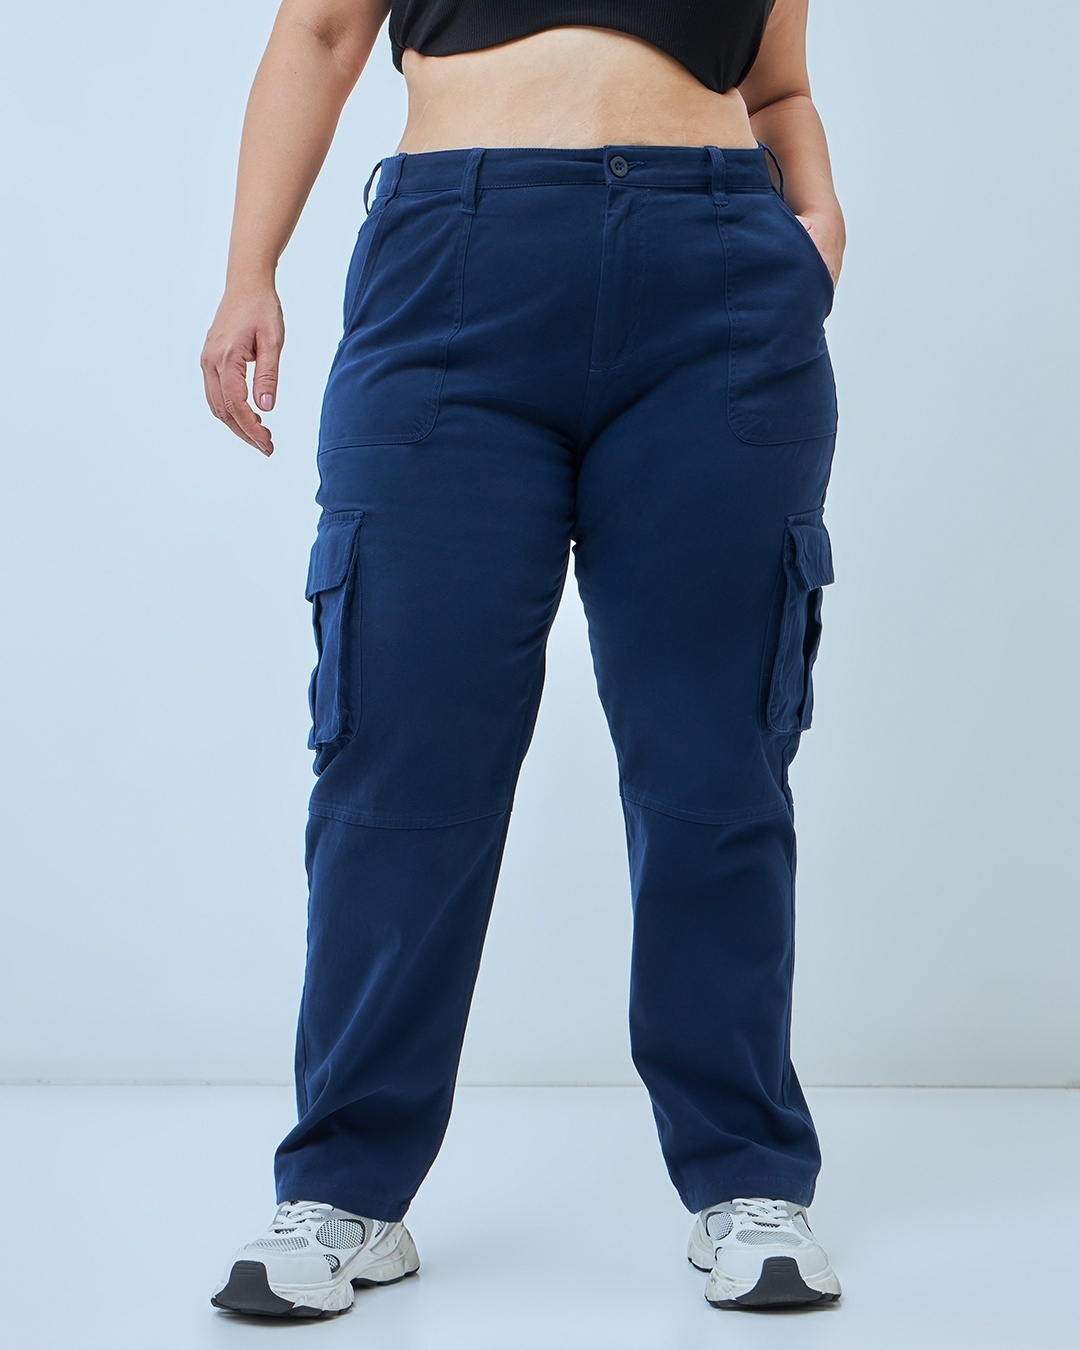 Buy Men Wide Leg 6 Pocket Cargo Denim Jeans (32, Black) at Amazon.in